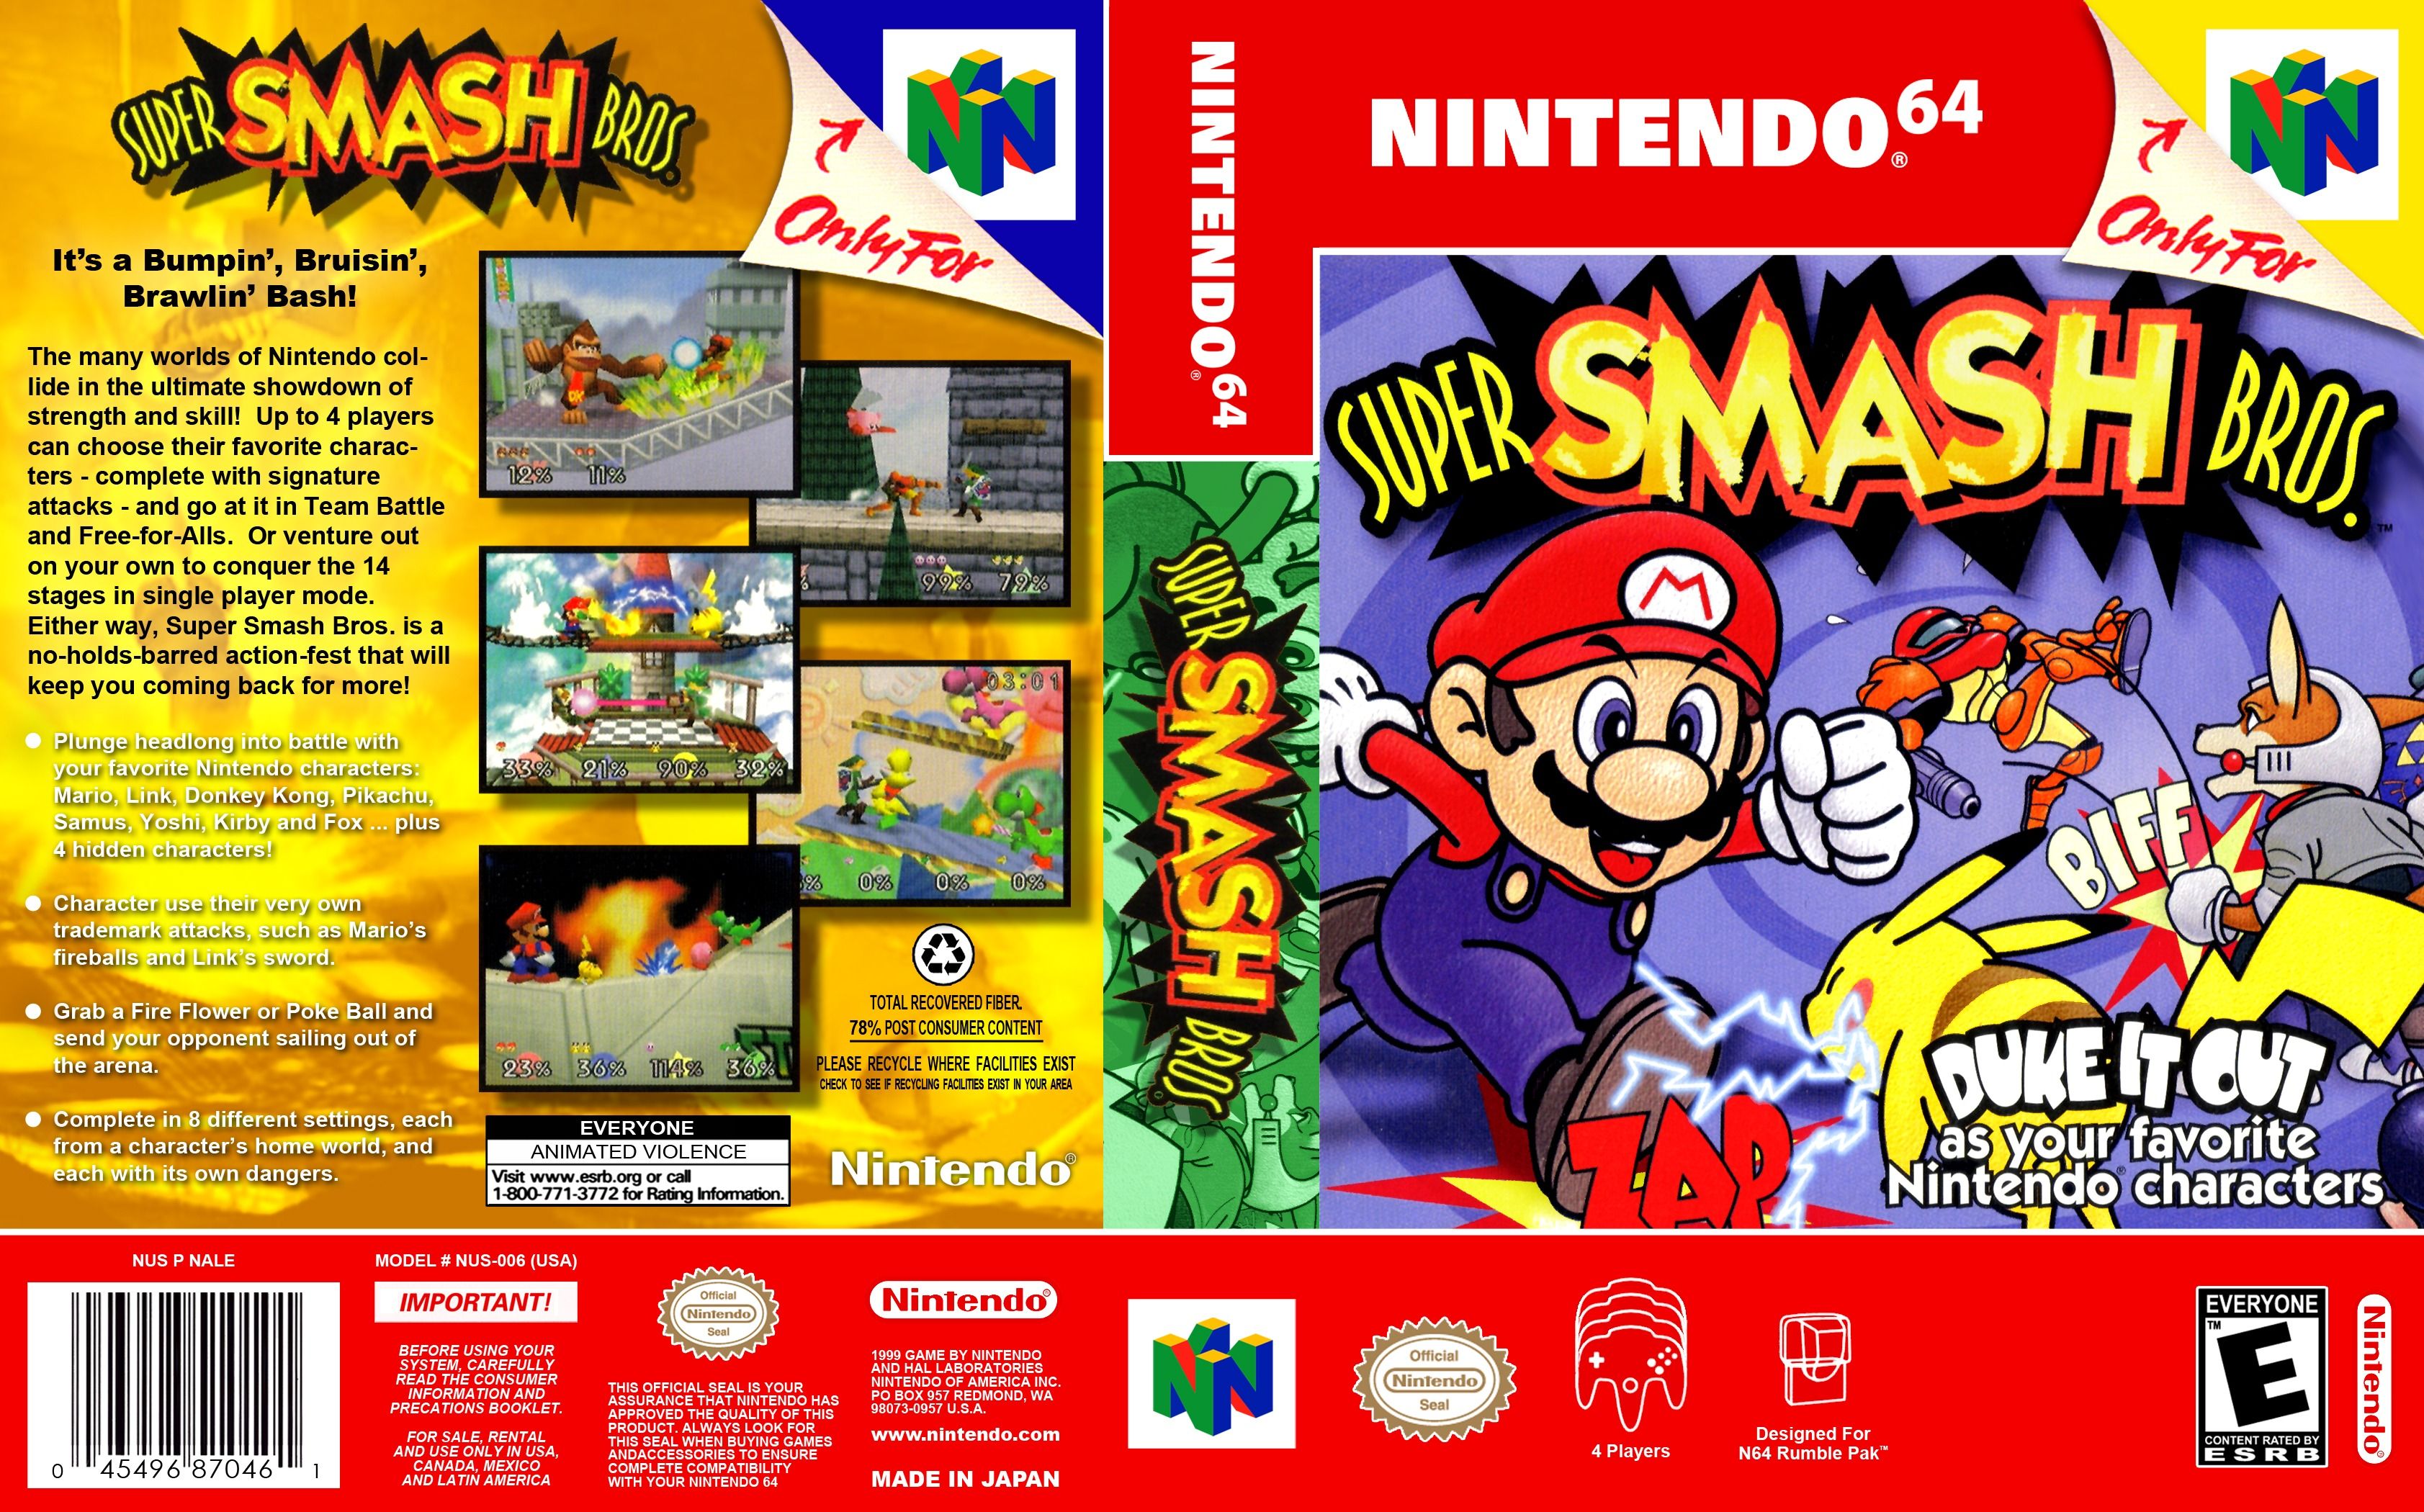 Сборник игр нинтендо. Nintendo 64 смэш БРОС. Супер Смаш БРОС Нинтендо 64. Super Smash Bros на Нинтендо 64. Super Smash Bros Nintendo 64.